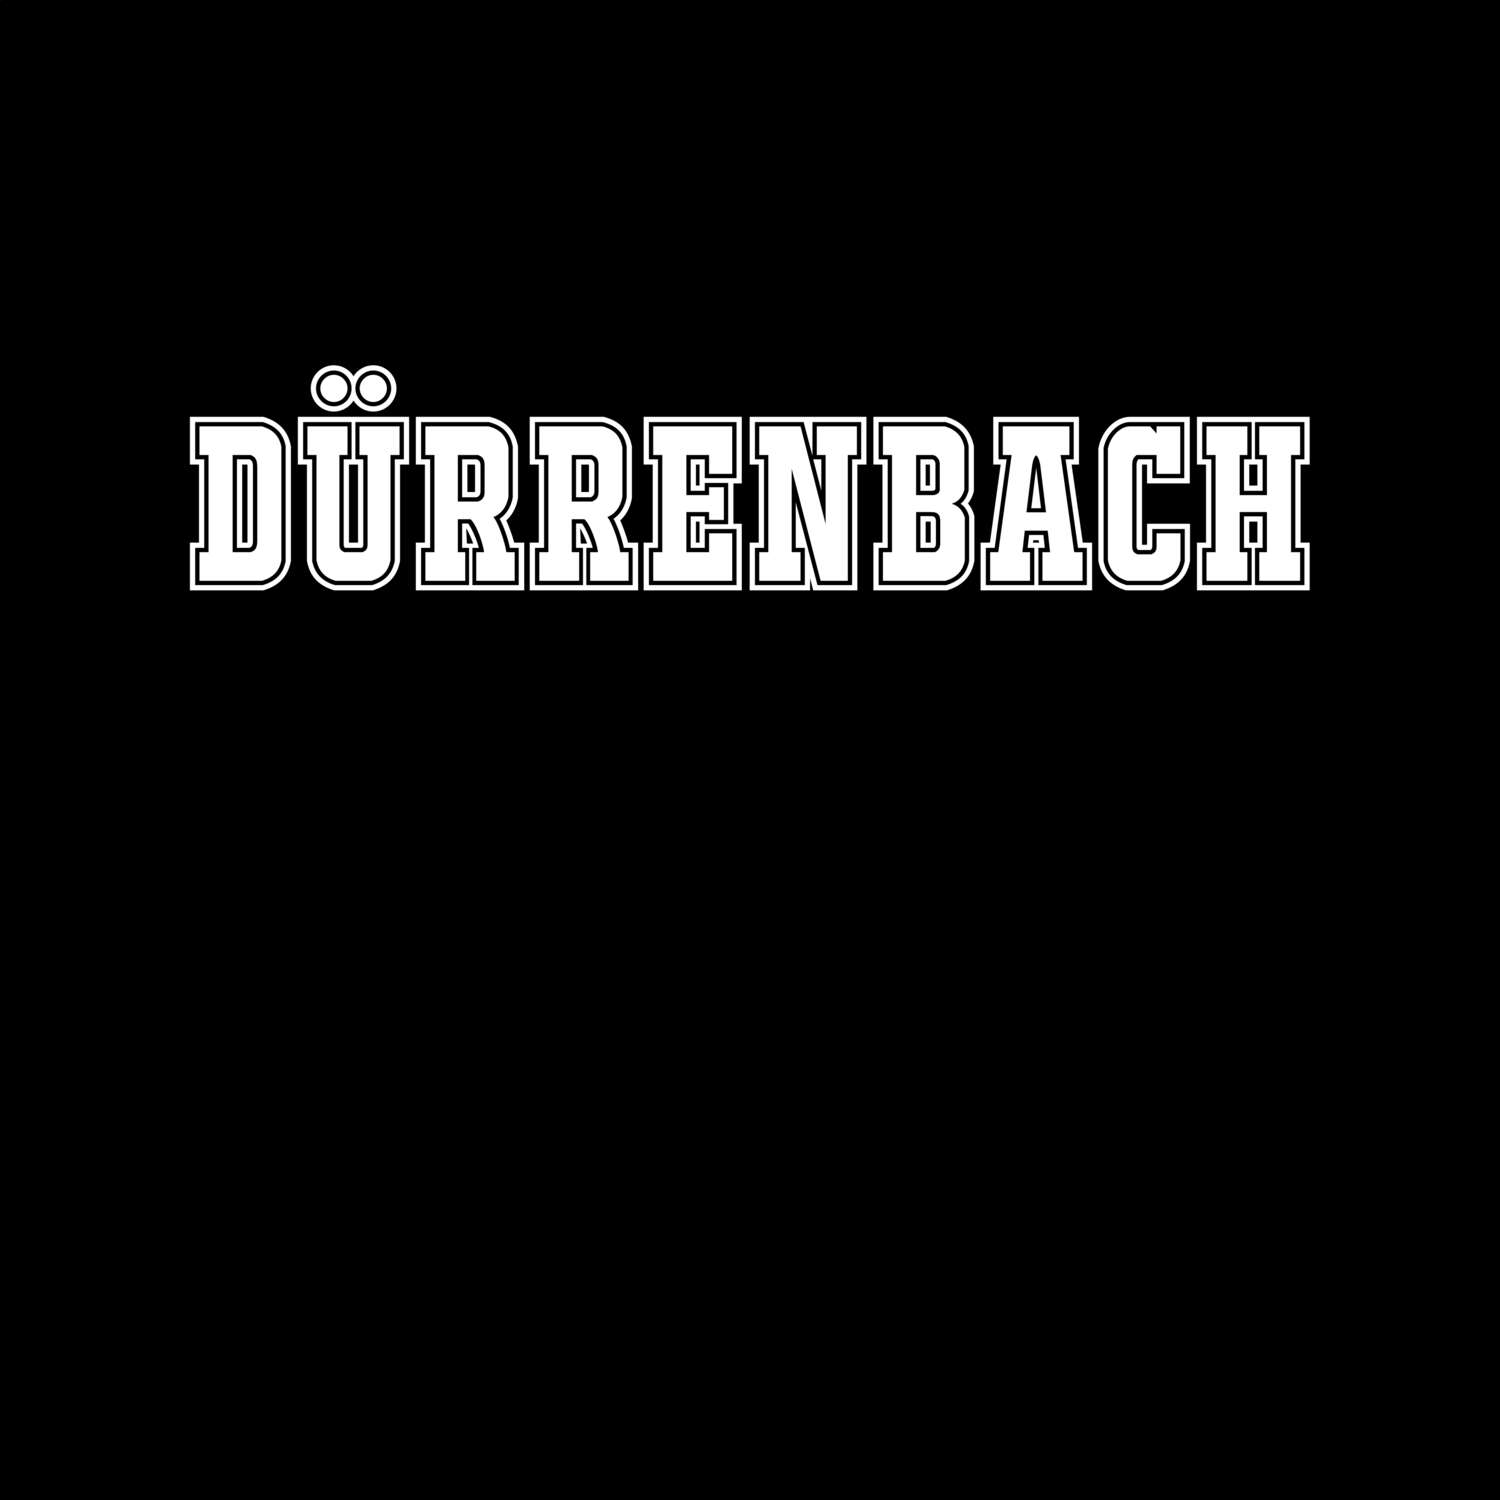 Dürrenbach T-Shirt »Classic«